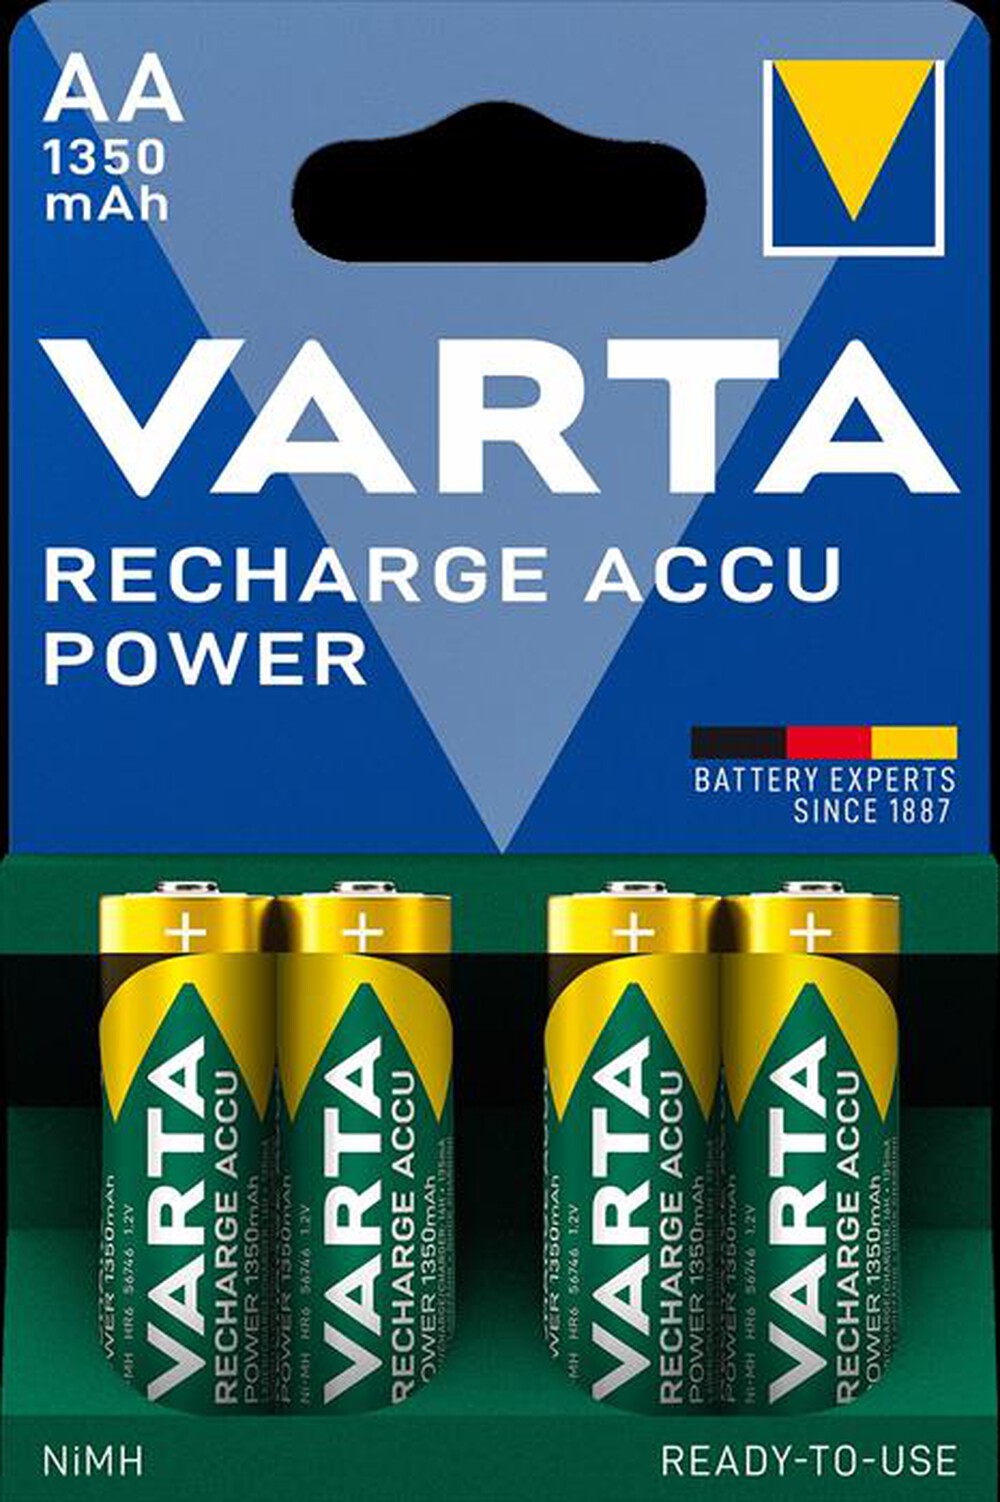 "VARTA - AA (STILO) RECHARGE ACCU POWER X4 (1350 MAH)"